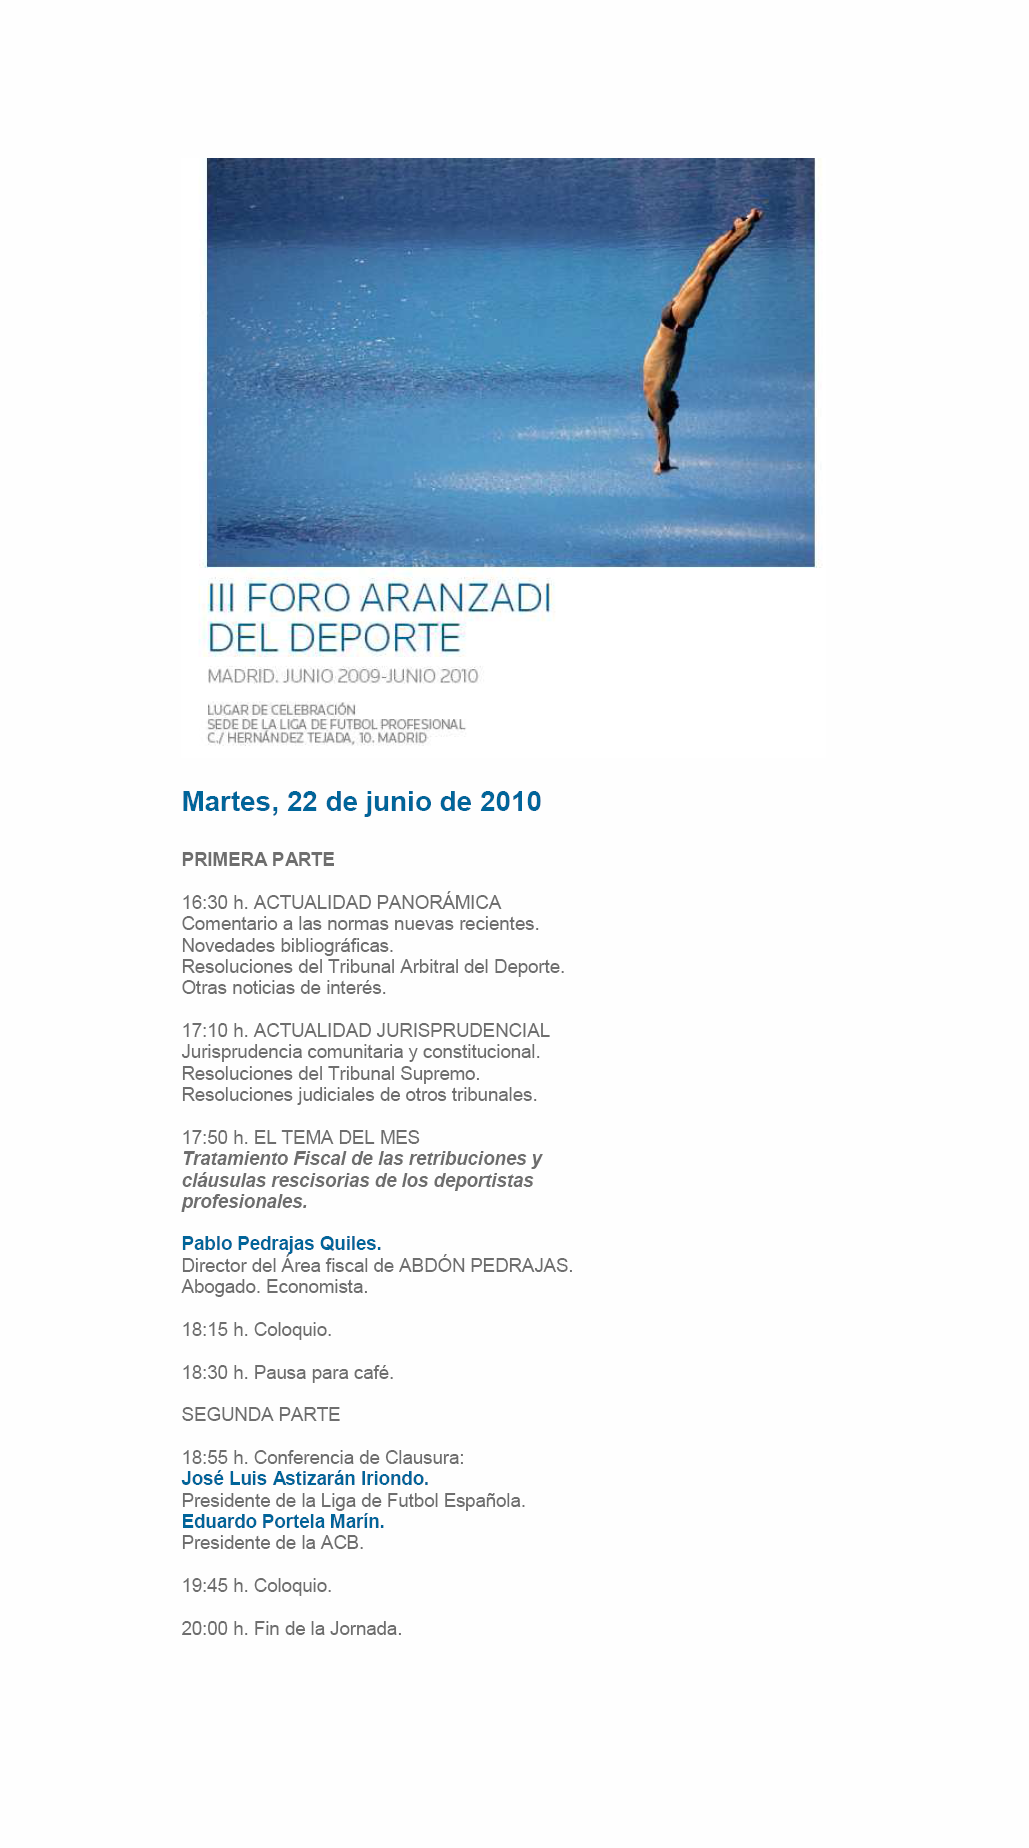 III FORO ARANZADI DEL DEPORTE MADRID JUNIO 2009-2010